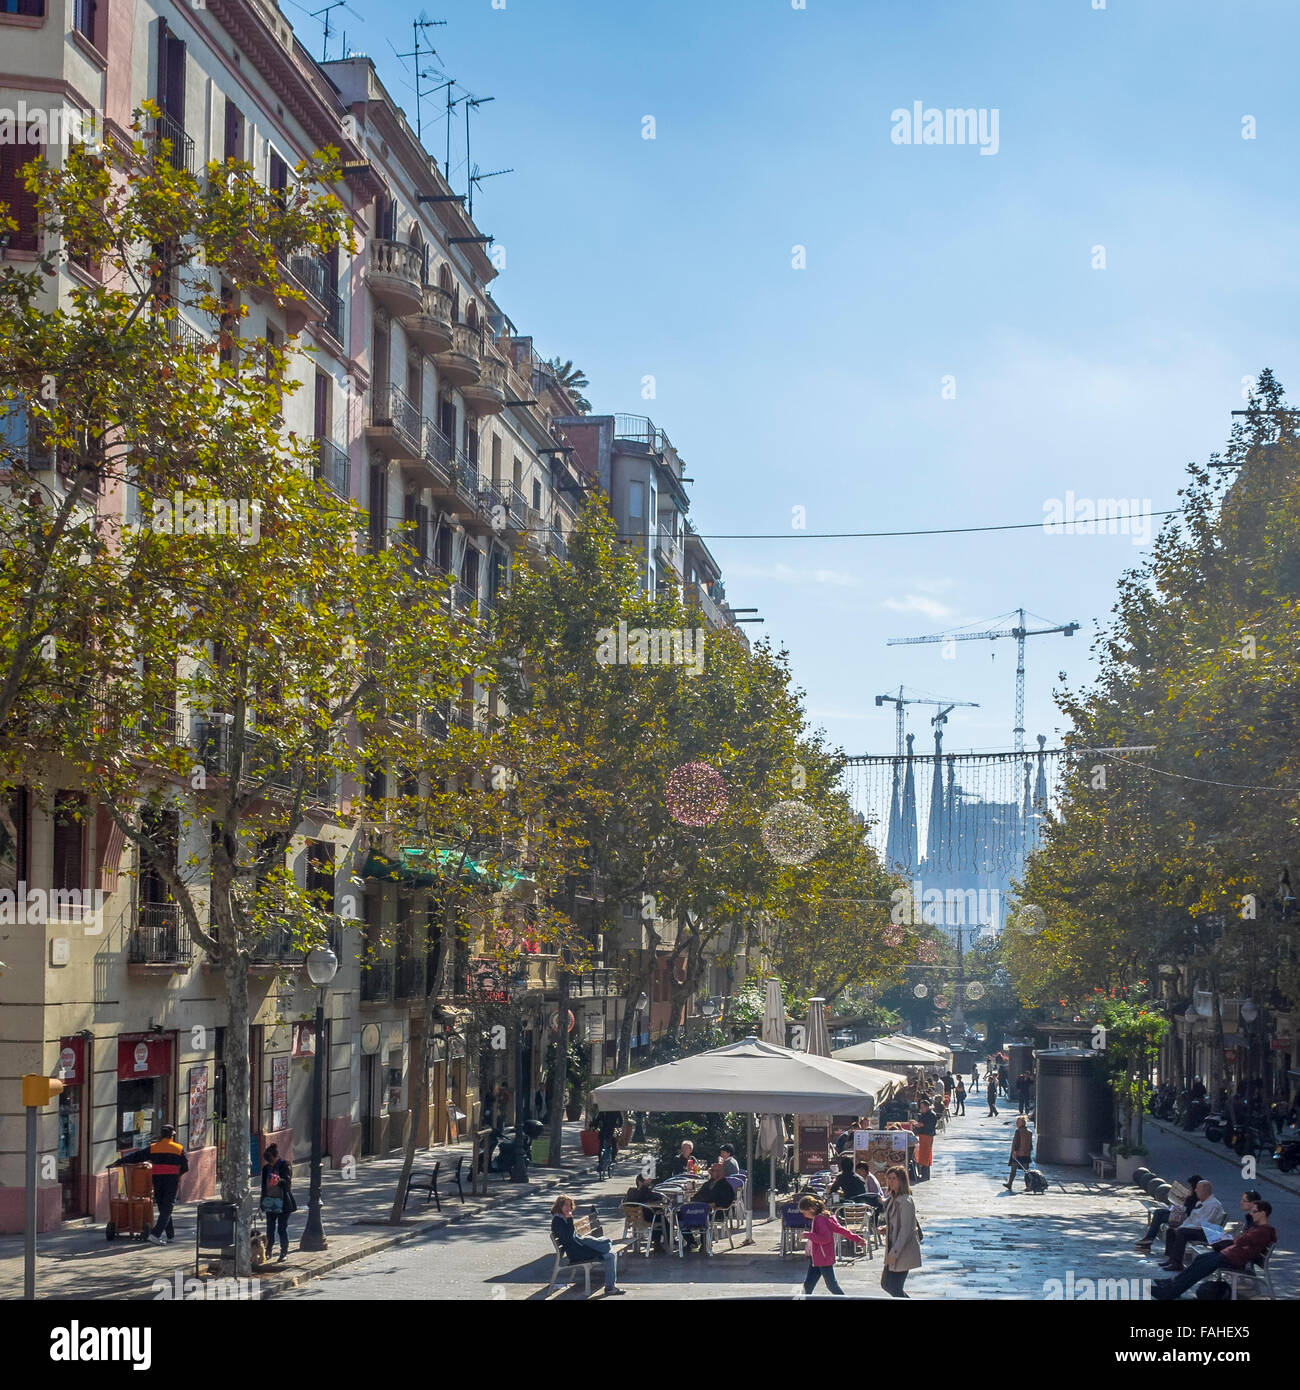 Avenida de Gaudi looking towards La Sagrada Familia, Barcelona - Catalonia, Spain Stock Photo